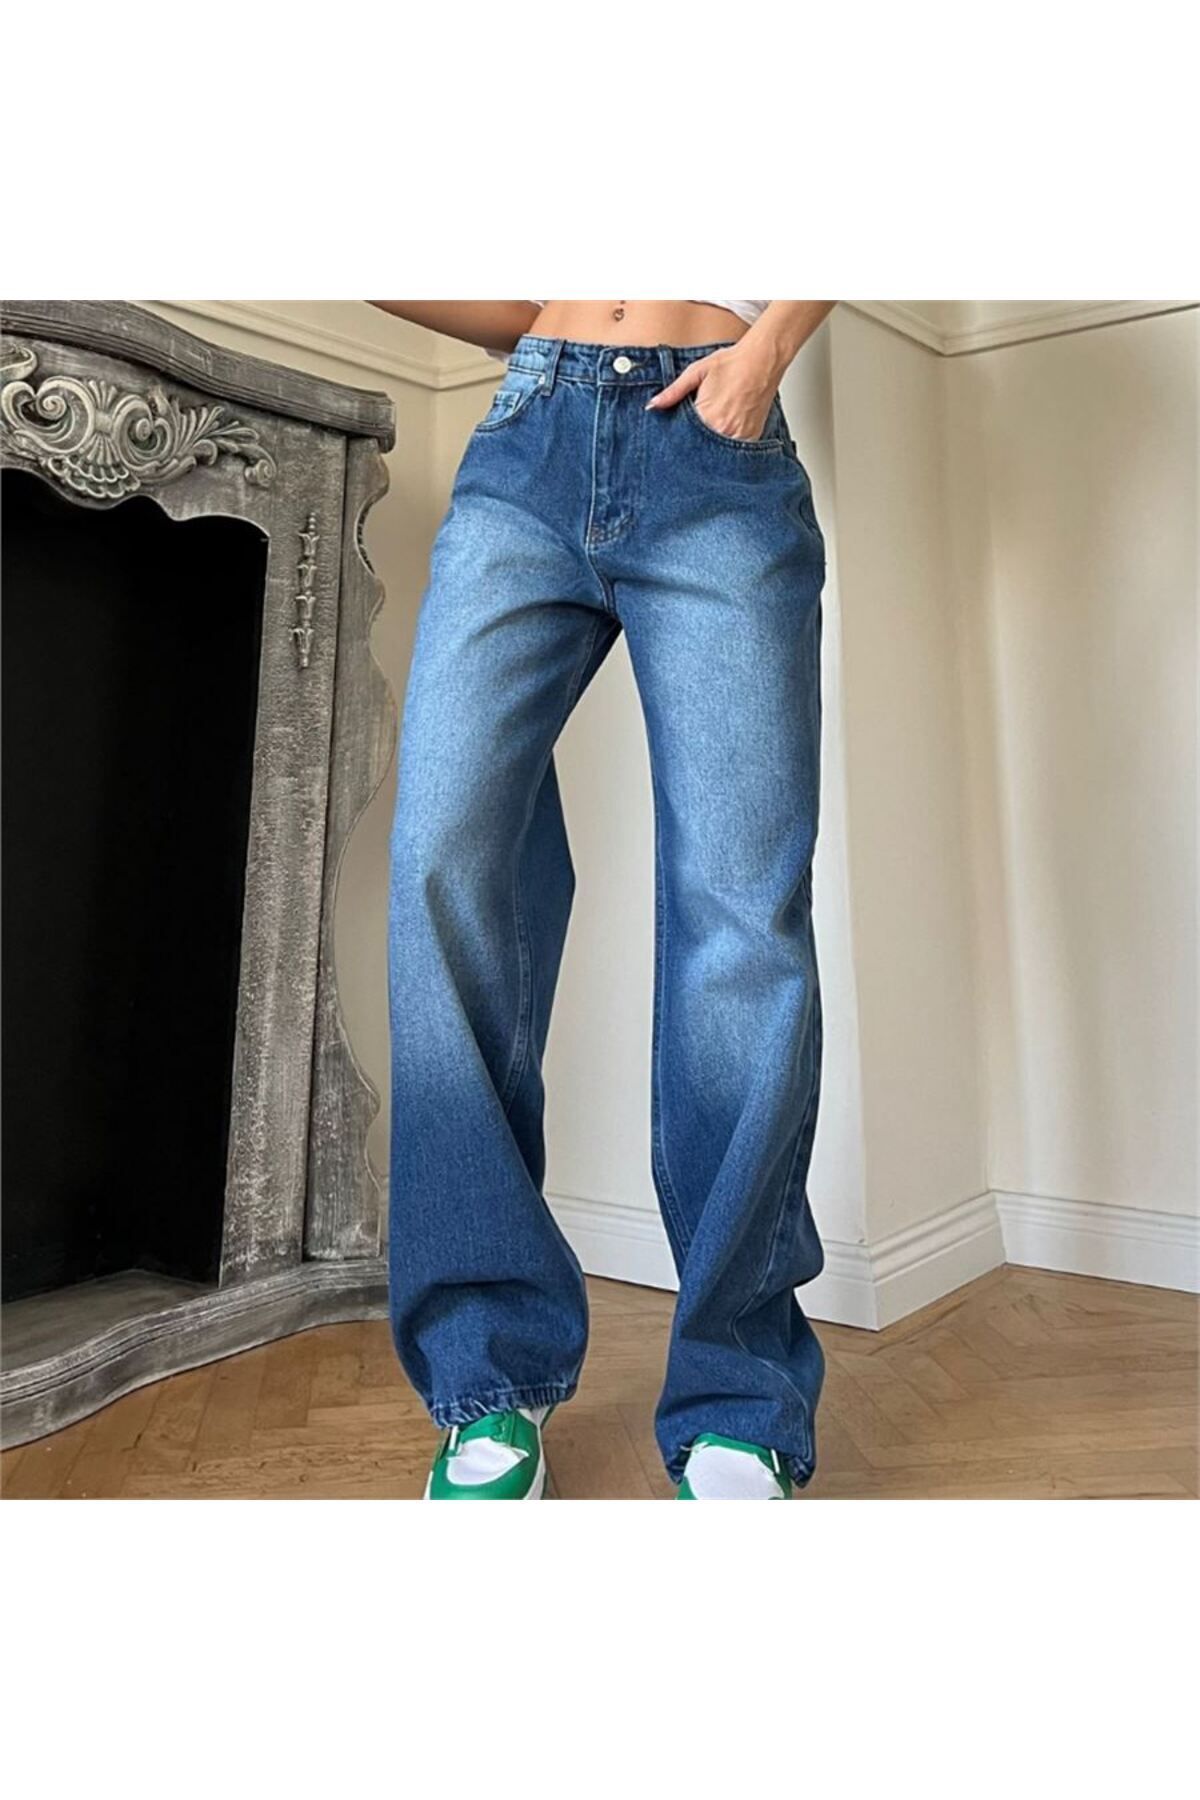 Köstebek Y2k New Style Vintage Mavi Kot Pantolon